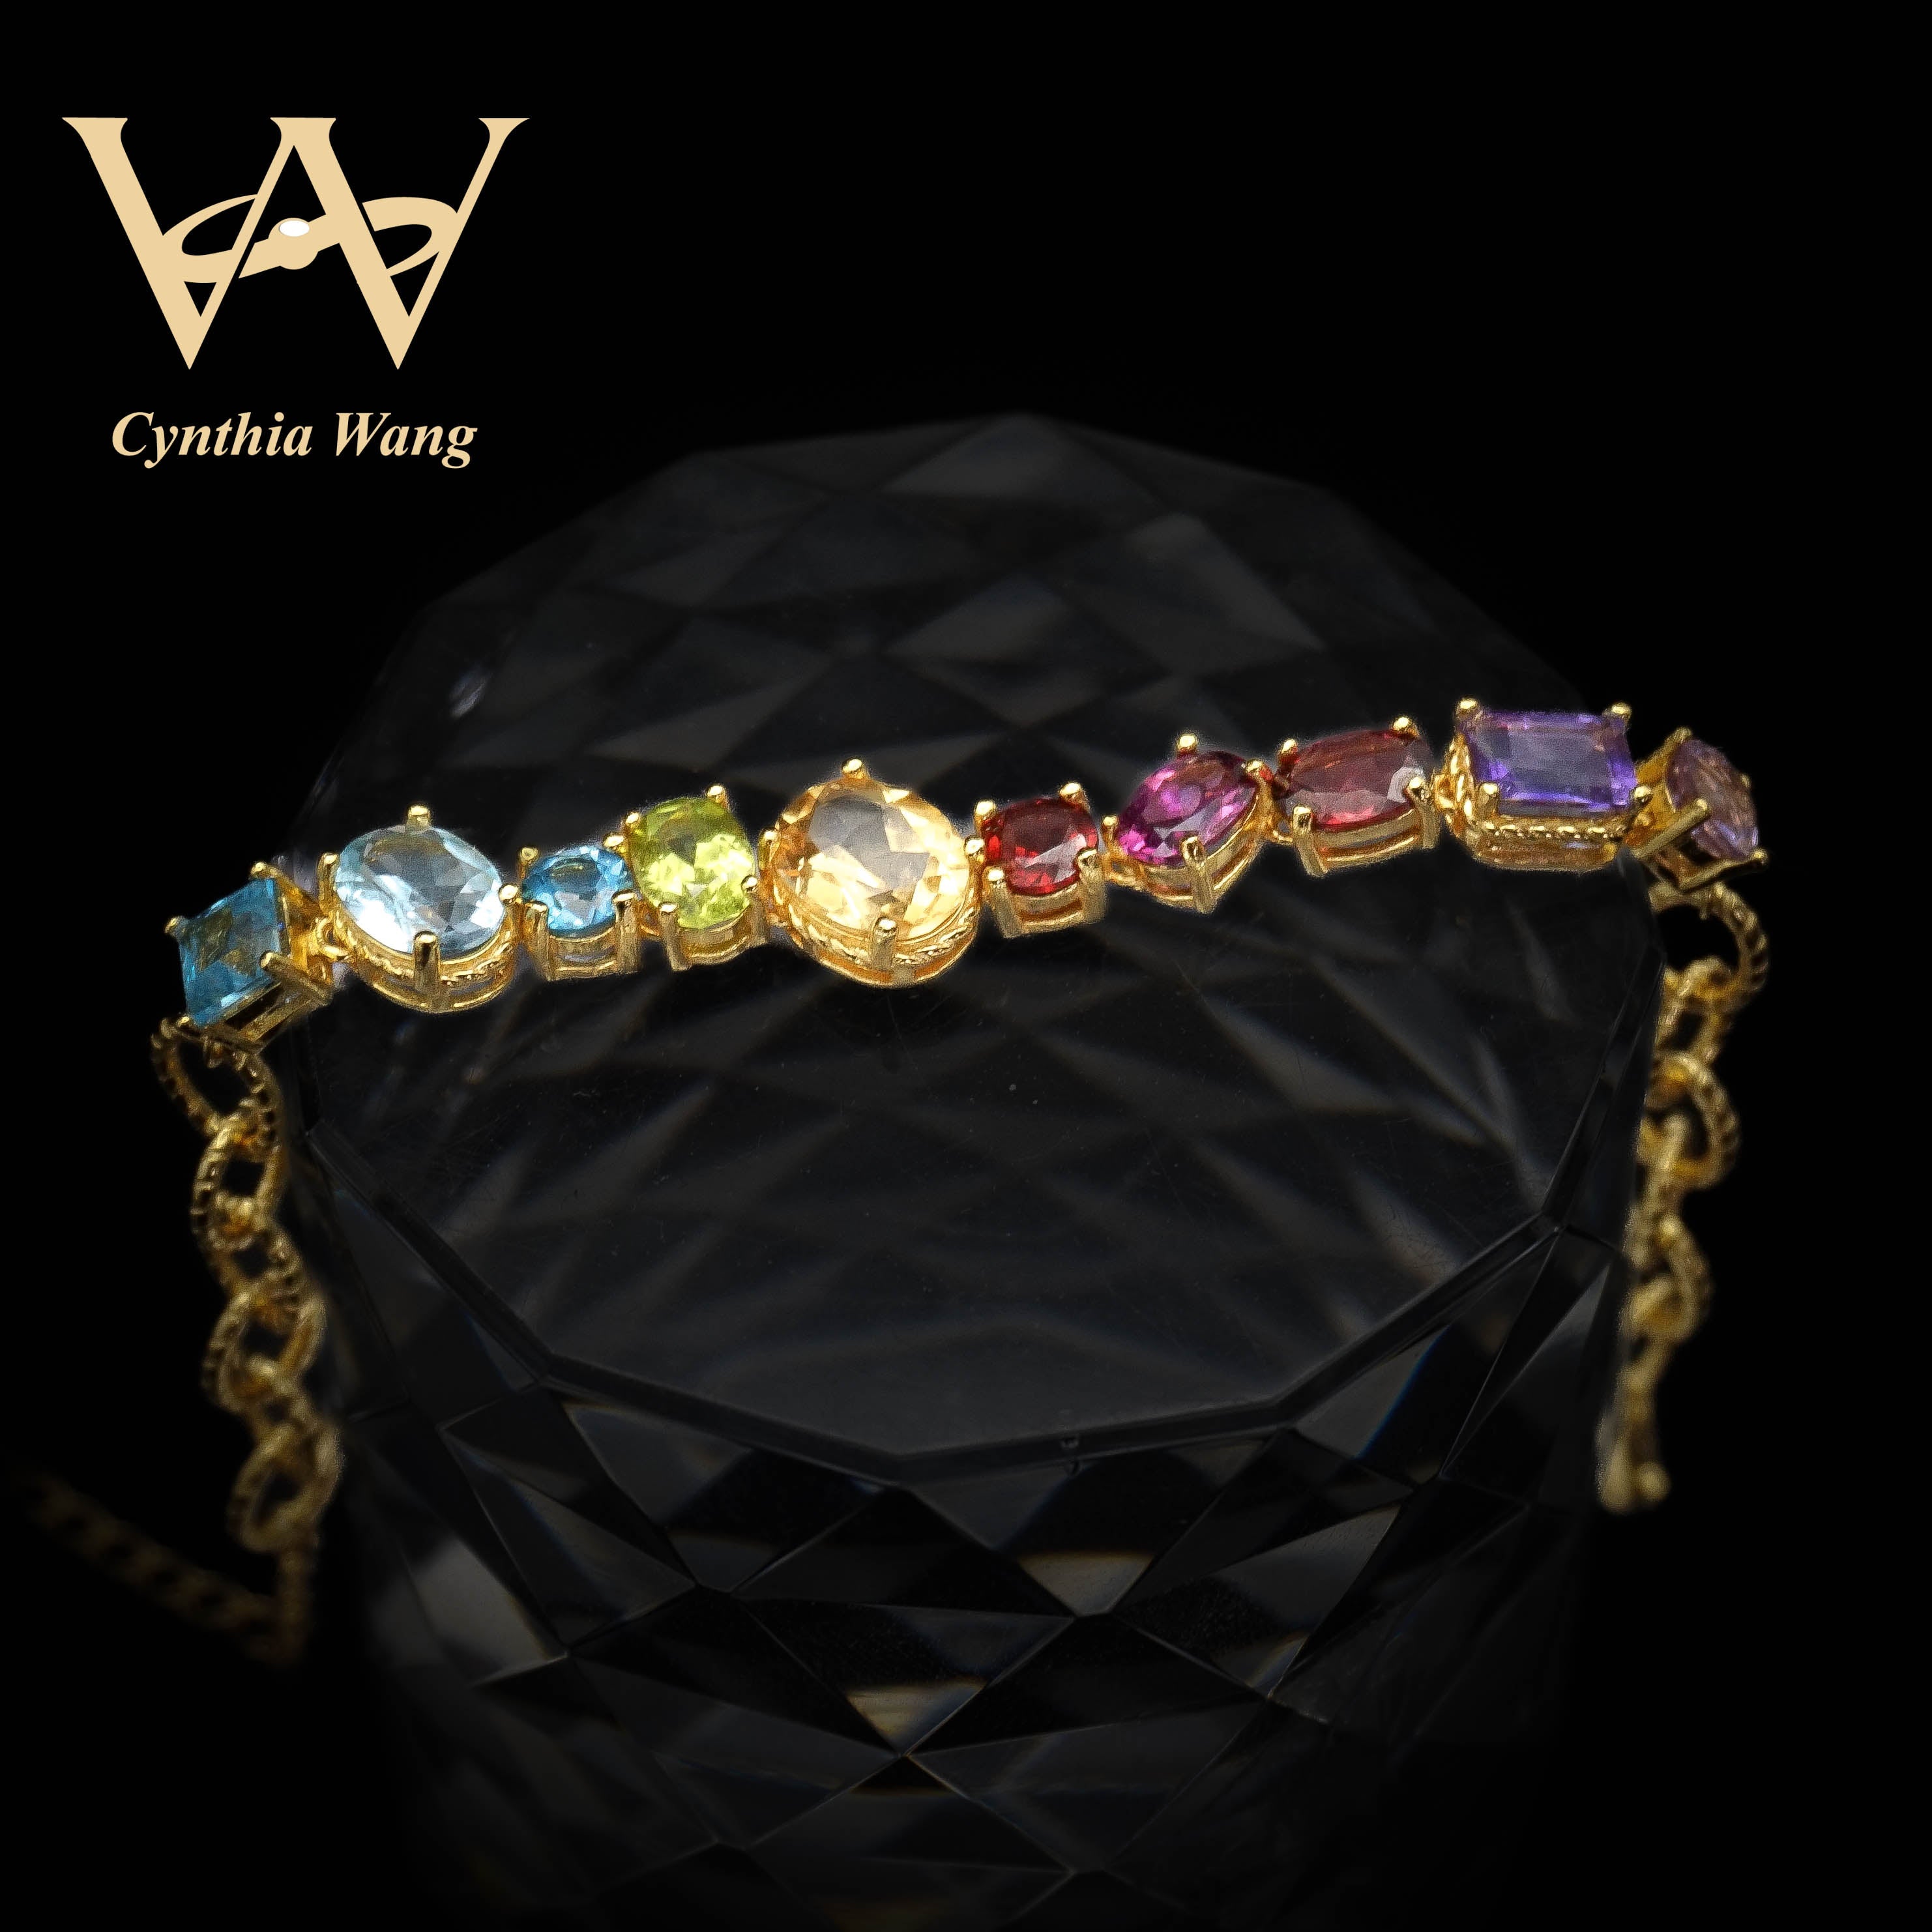 'Kaleidoscope of Gems' Bracelet